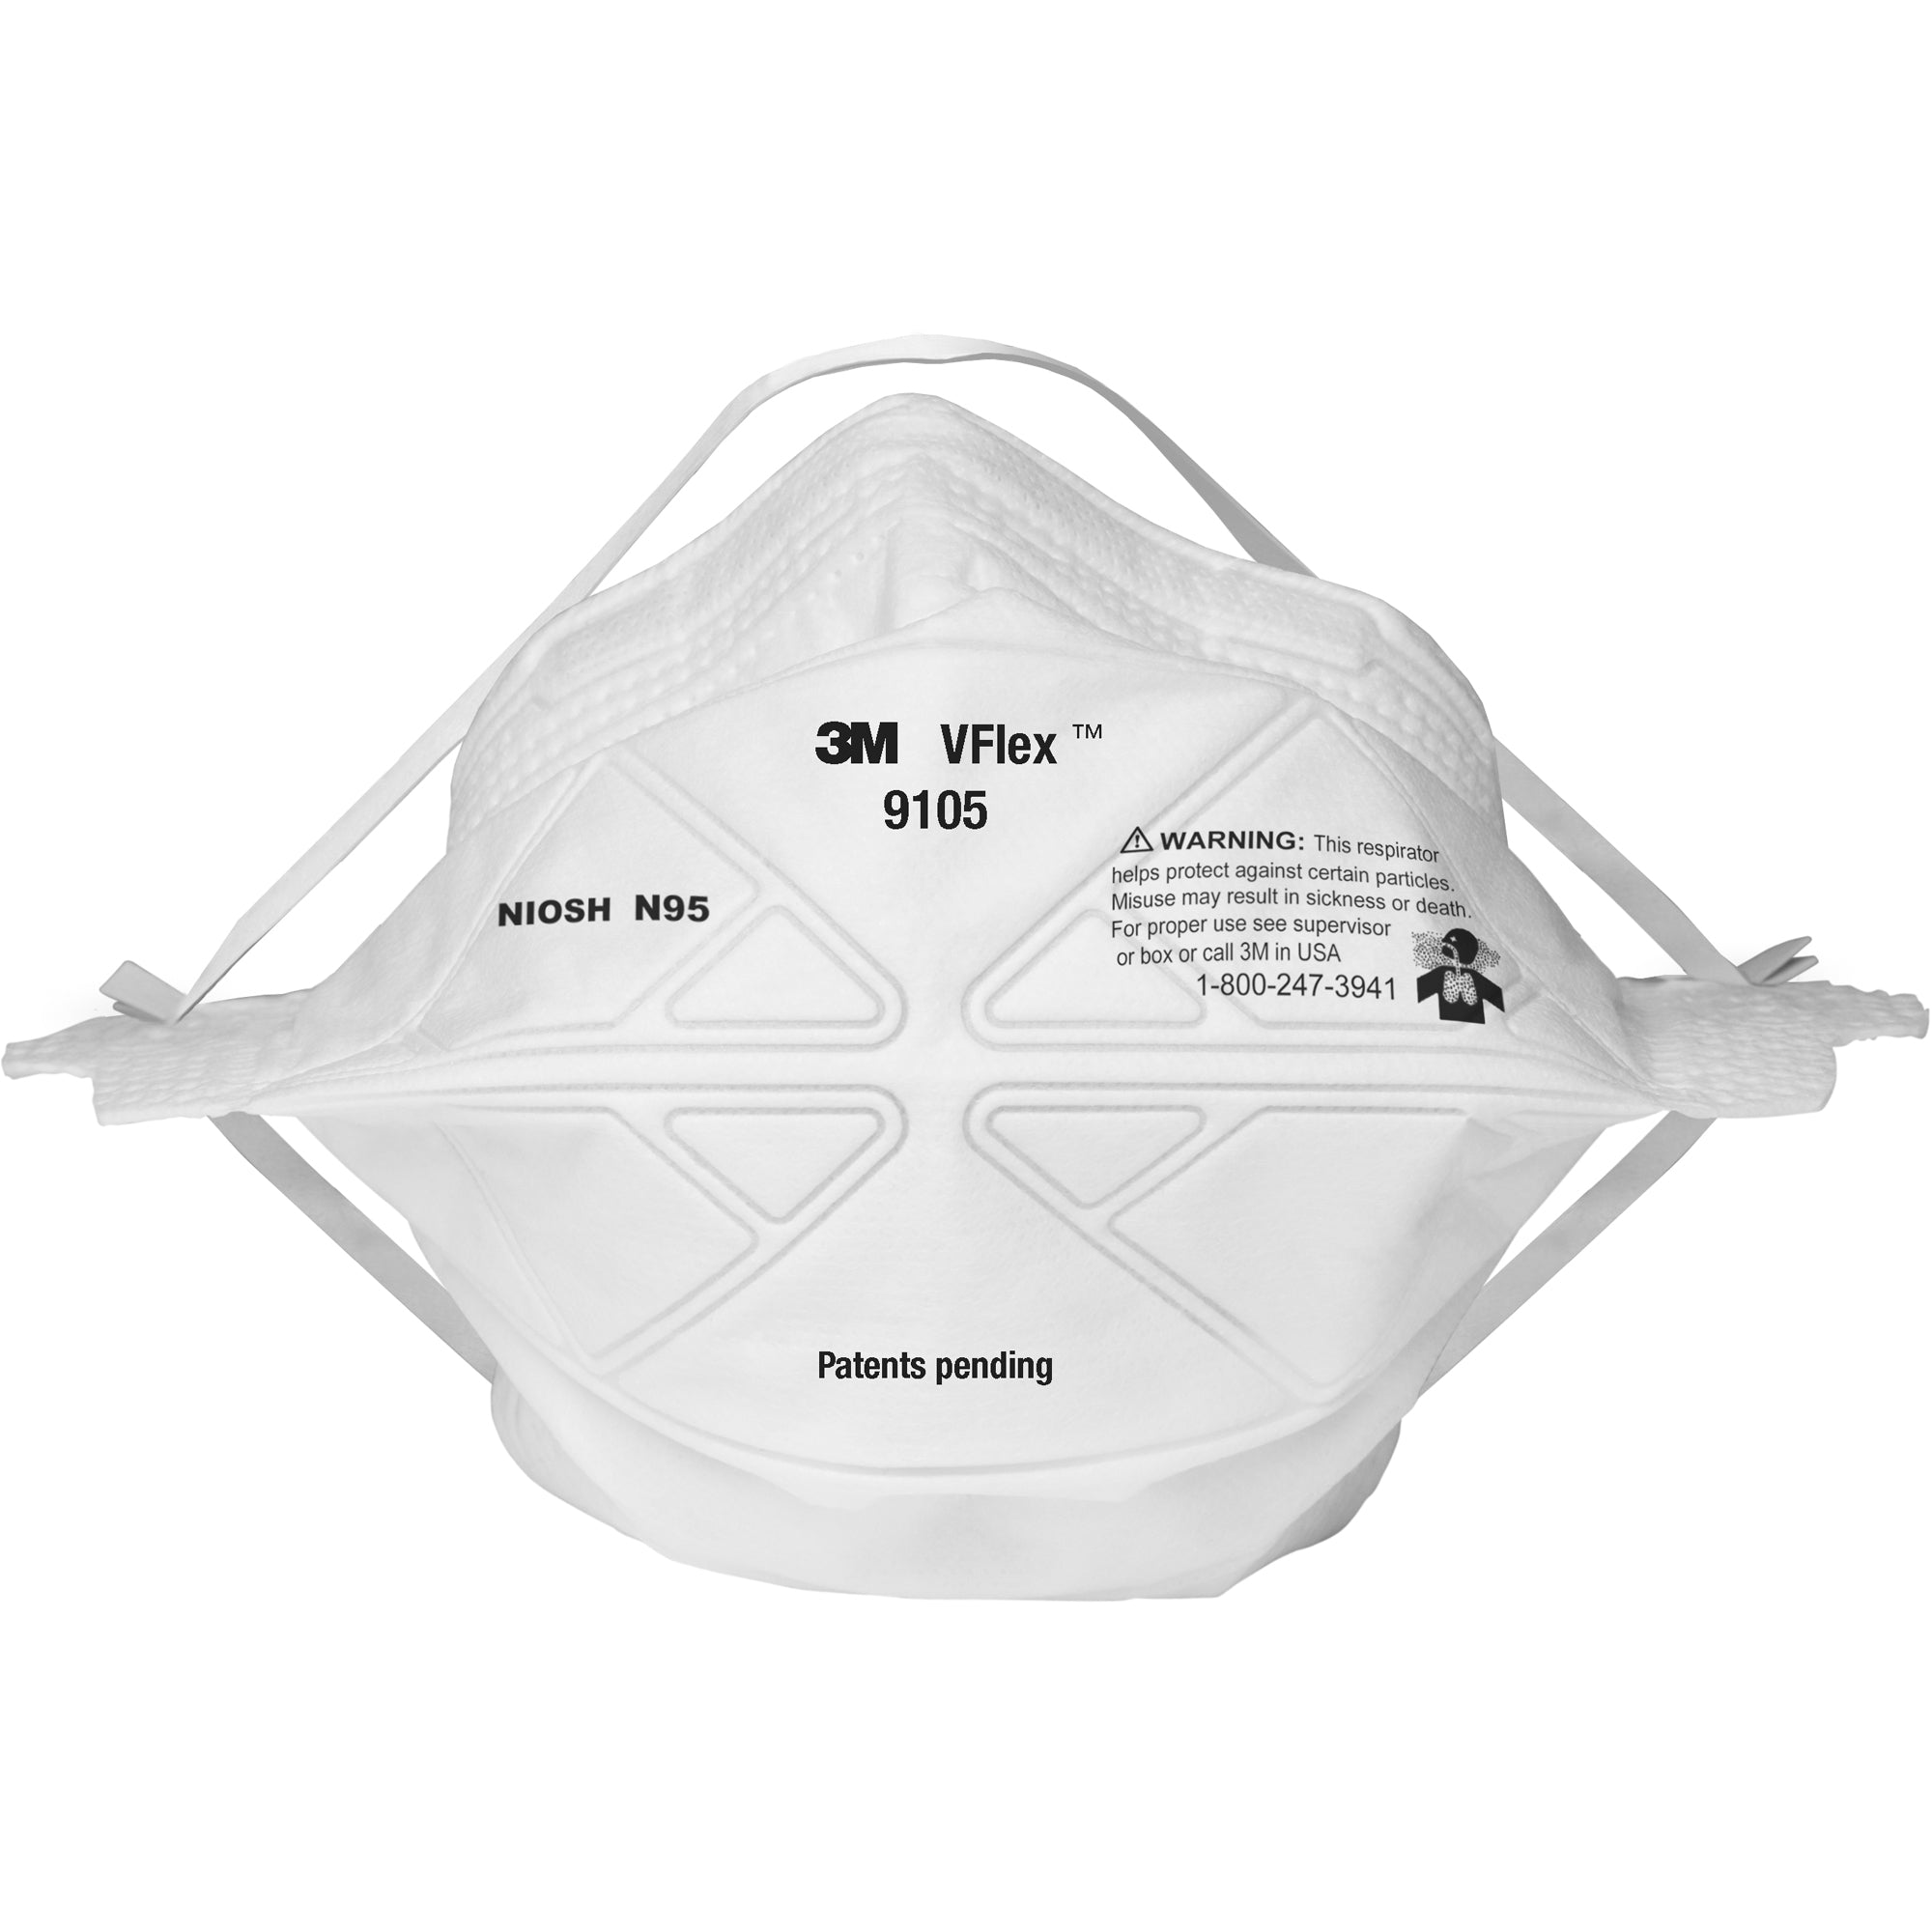 3M Canada 9105 NIOSH N95 VFlex Respirator Face Mask - In Stock at Canada Strong Masks